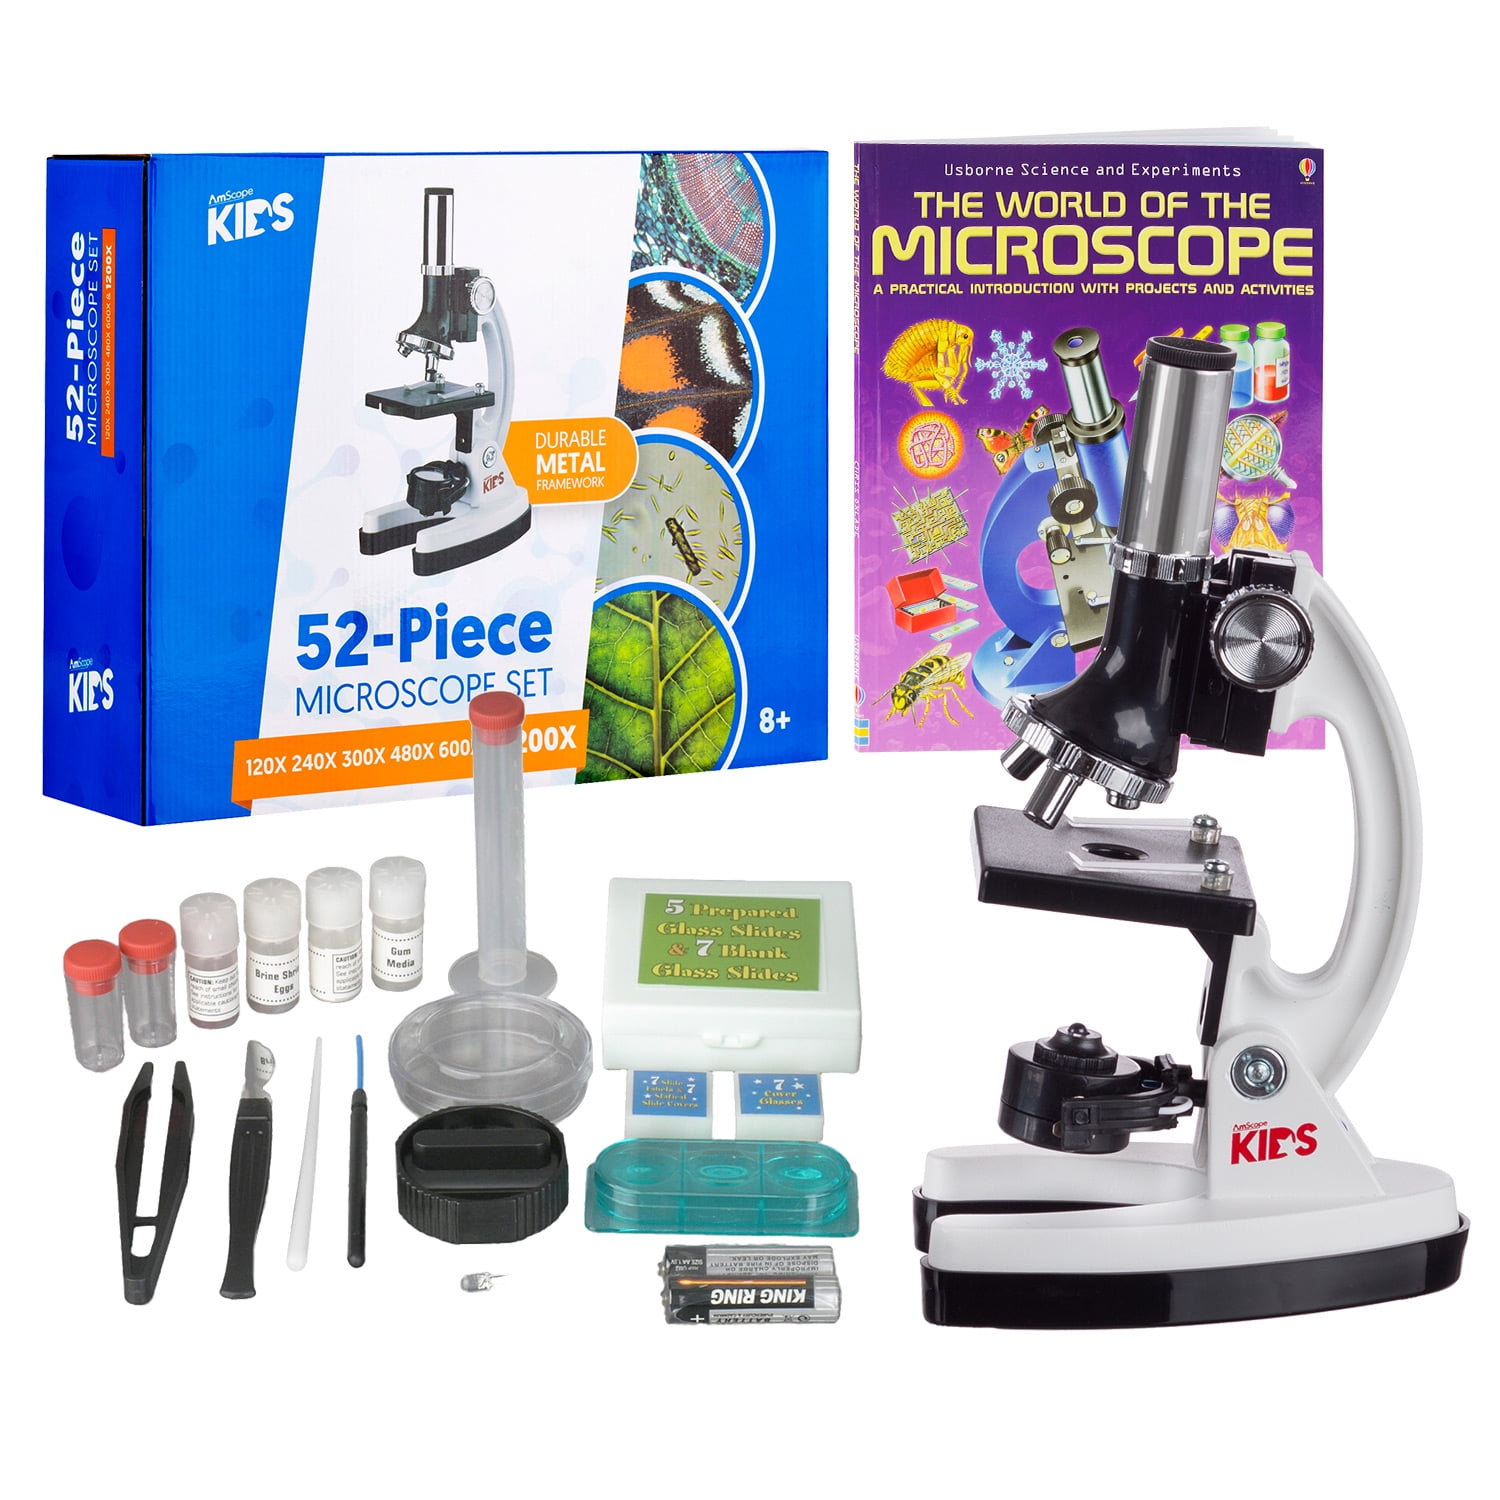 Storage Case 120X - 1200X Balance Living Microscope Set